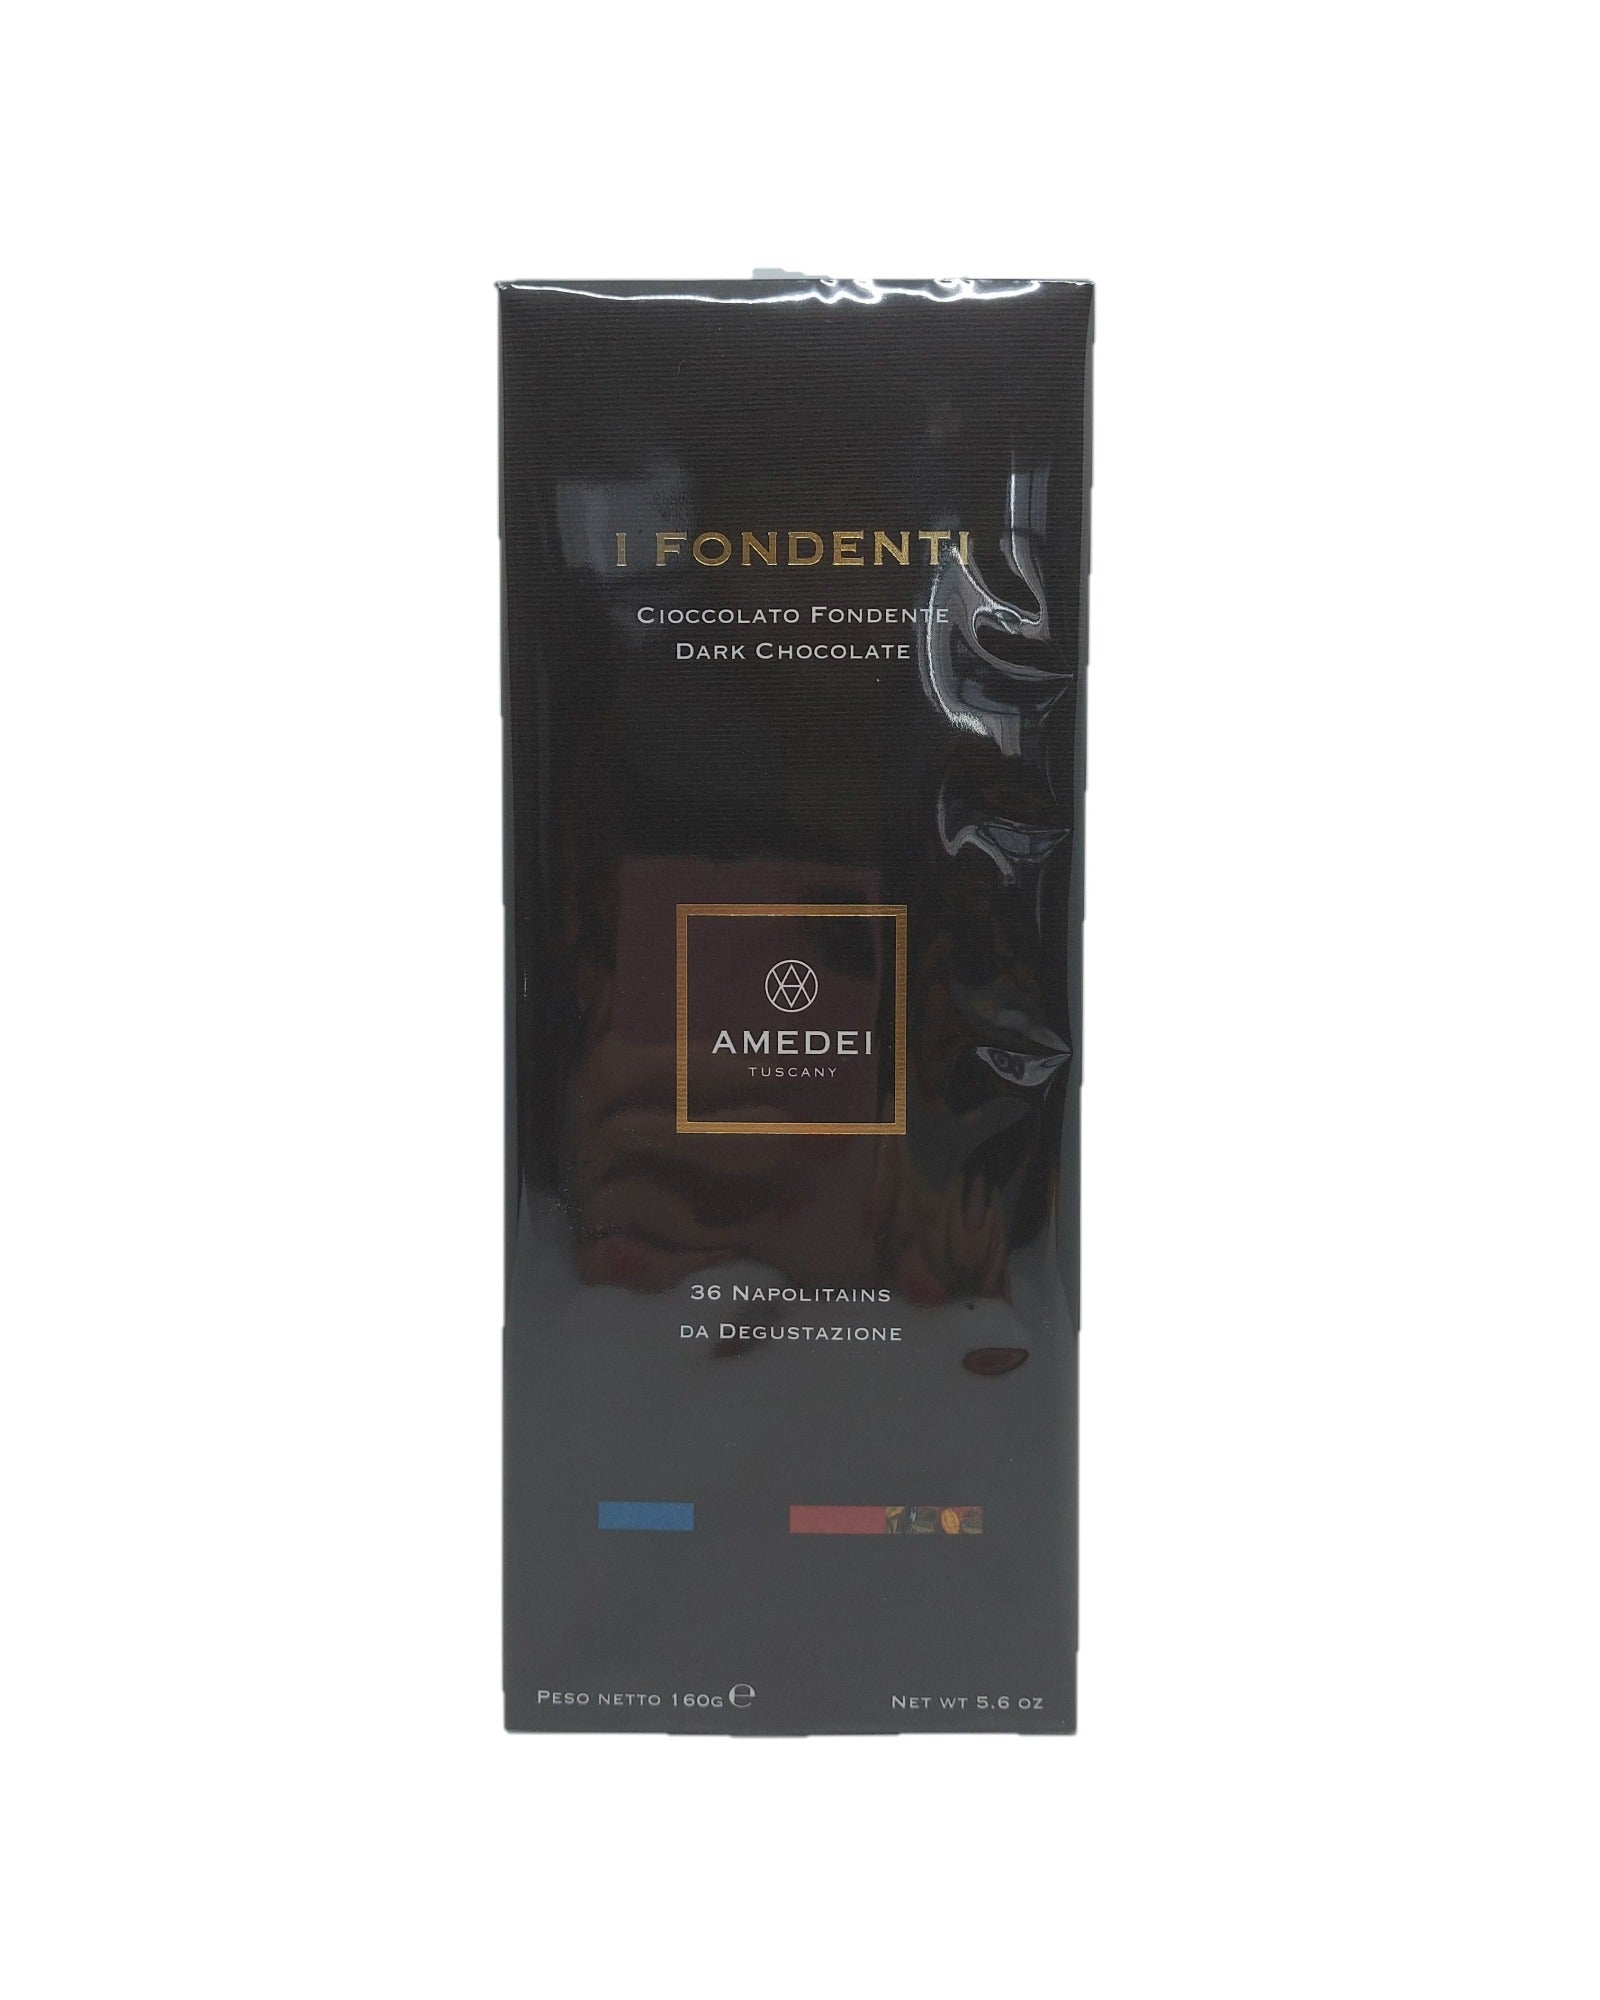 PRENDIME - Dark Chocolate Bar with Almonds 150g